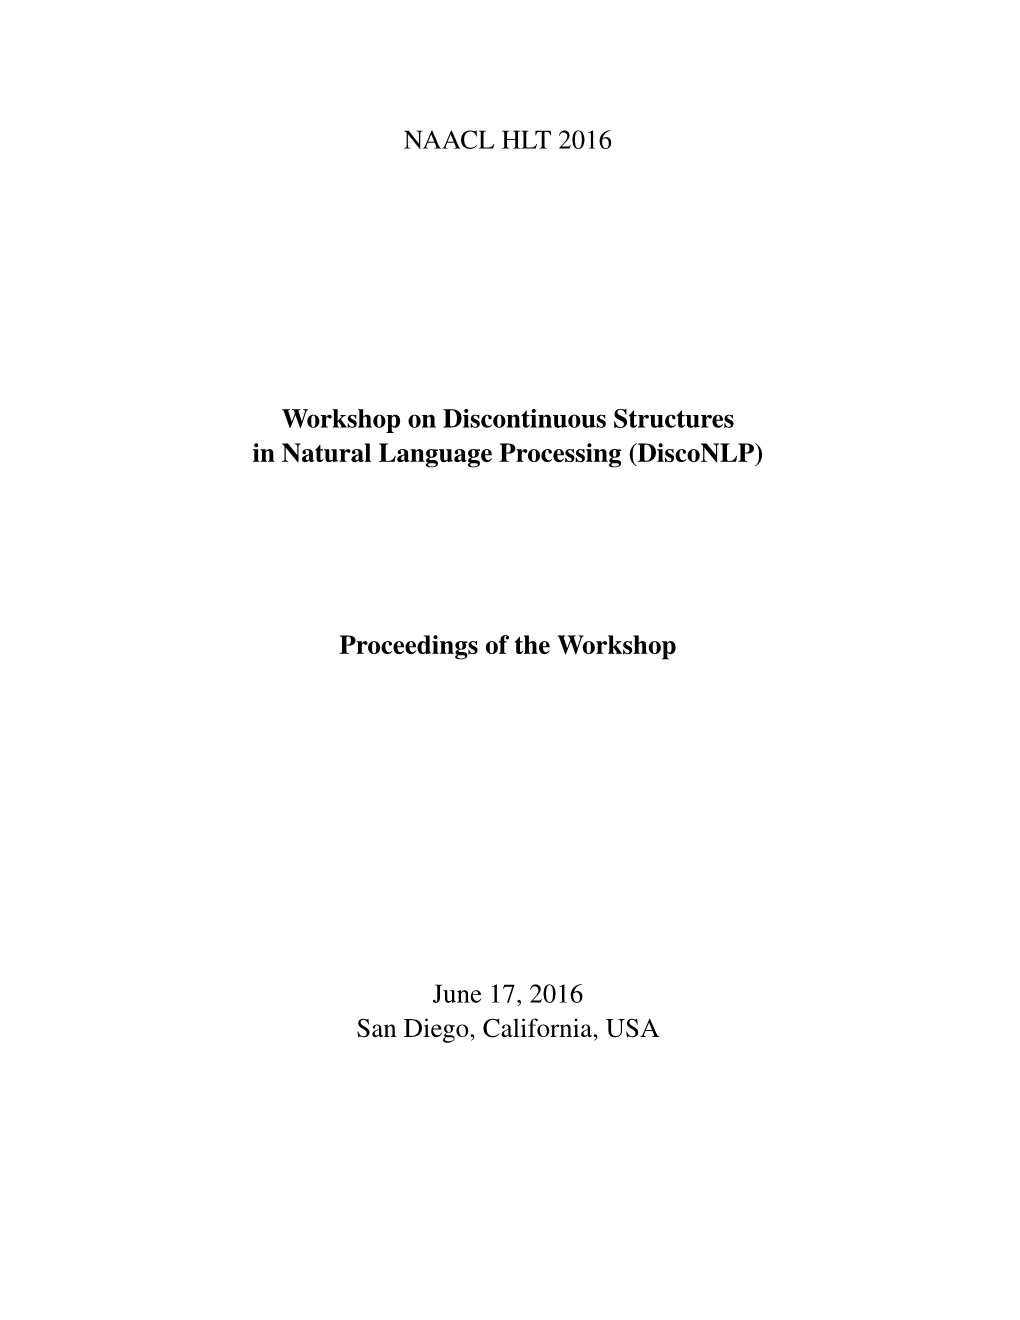 Proceedings of NAACL-HLT 2016